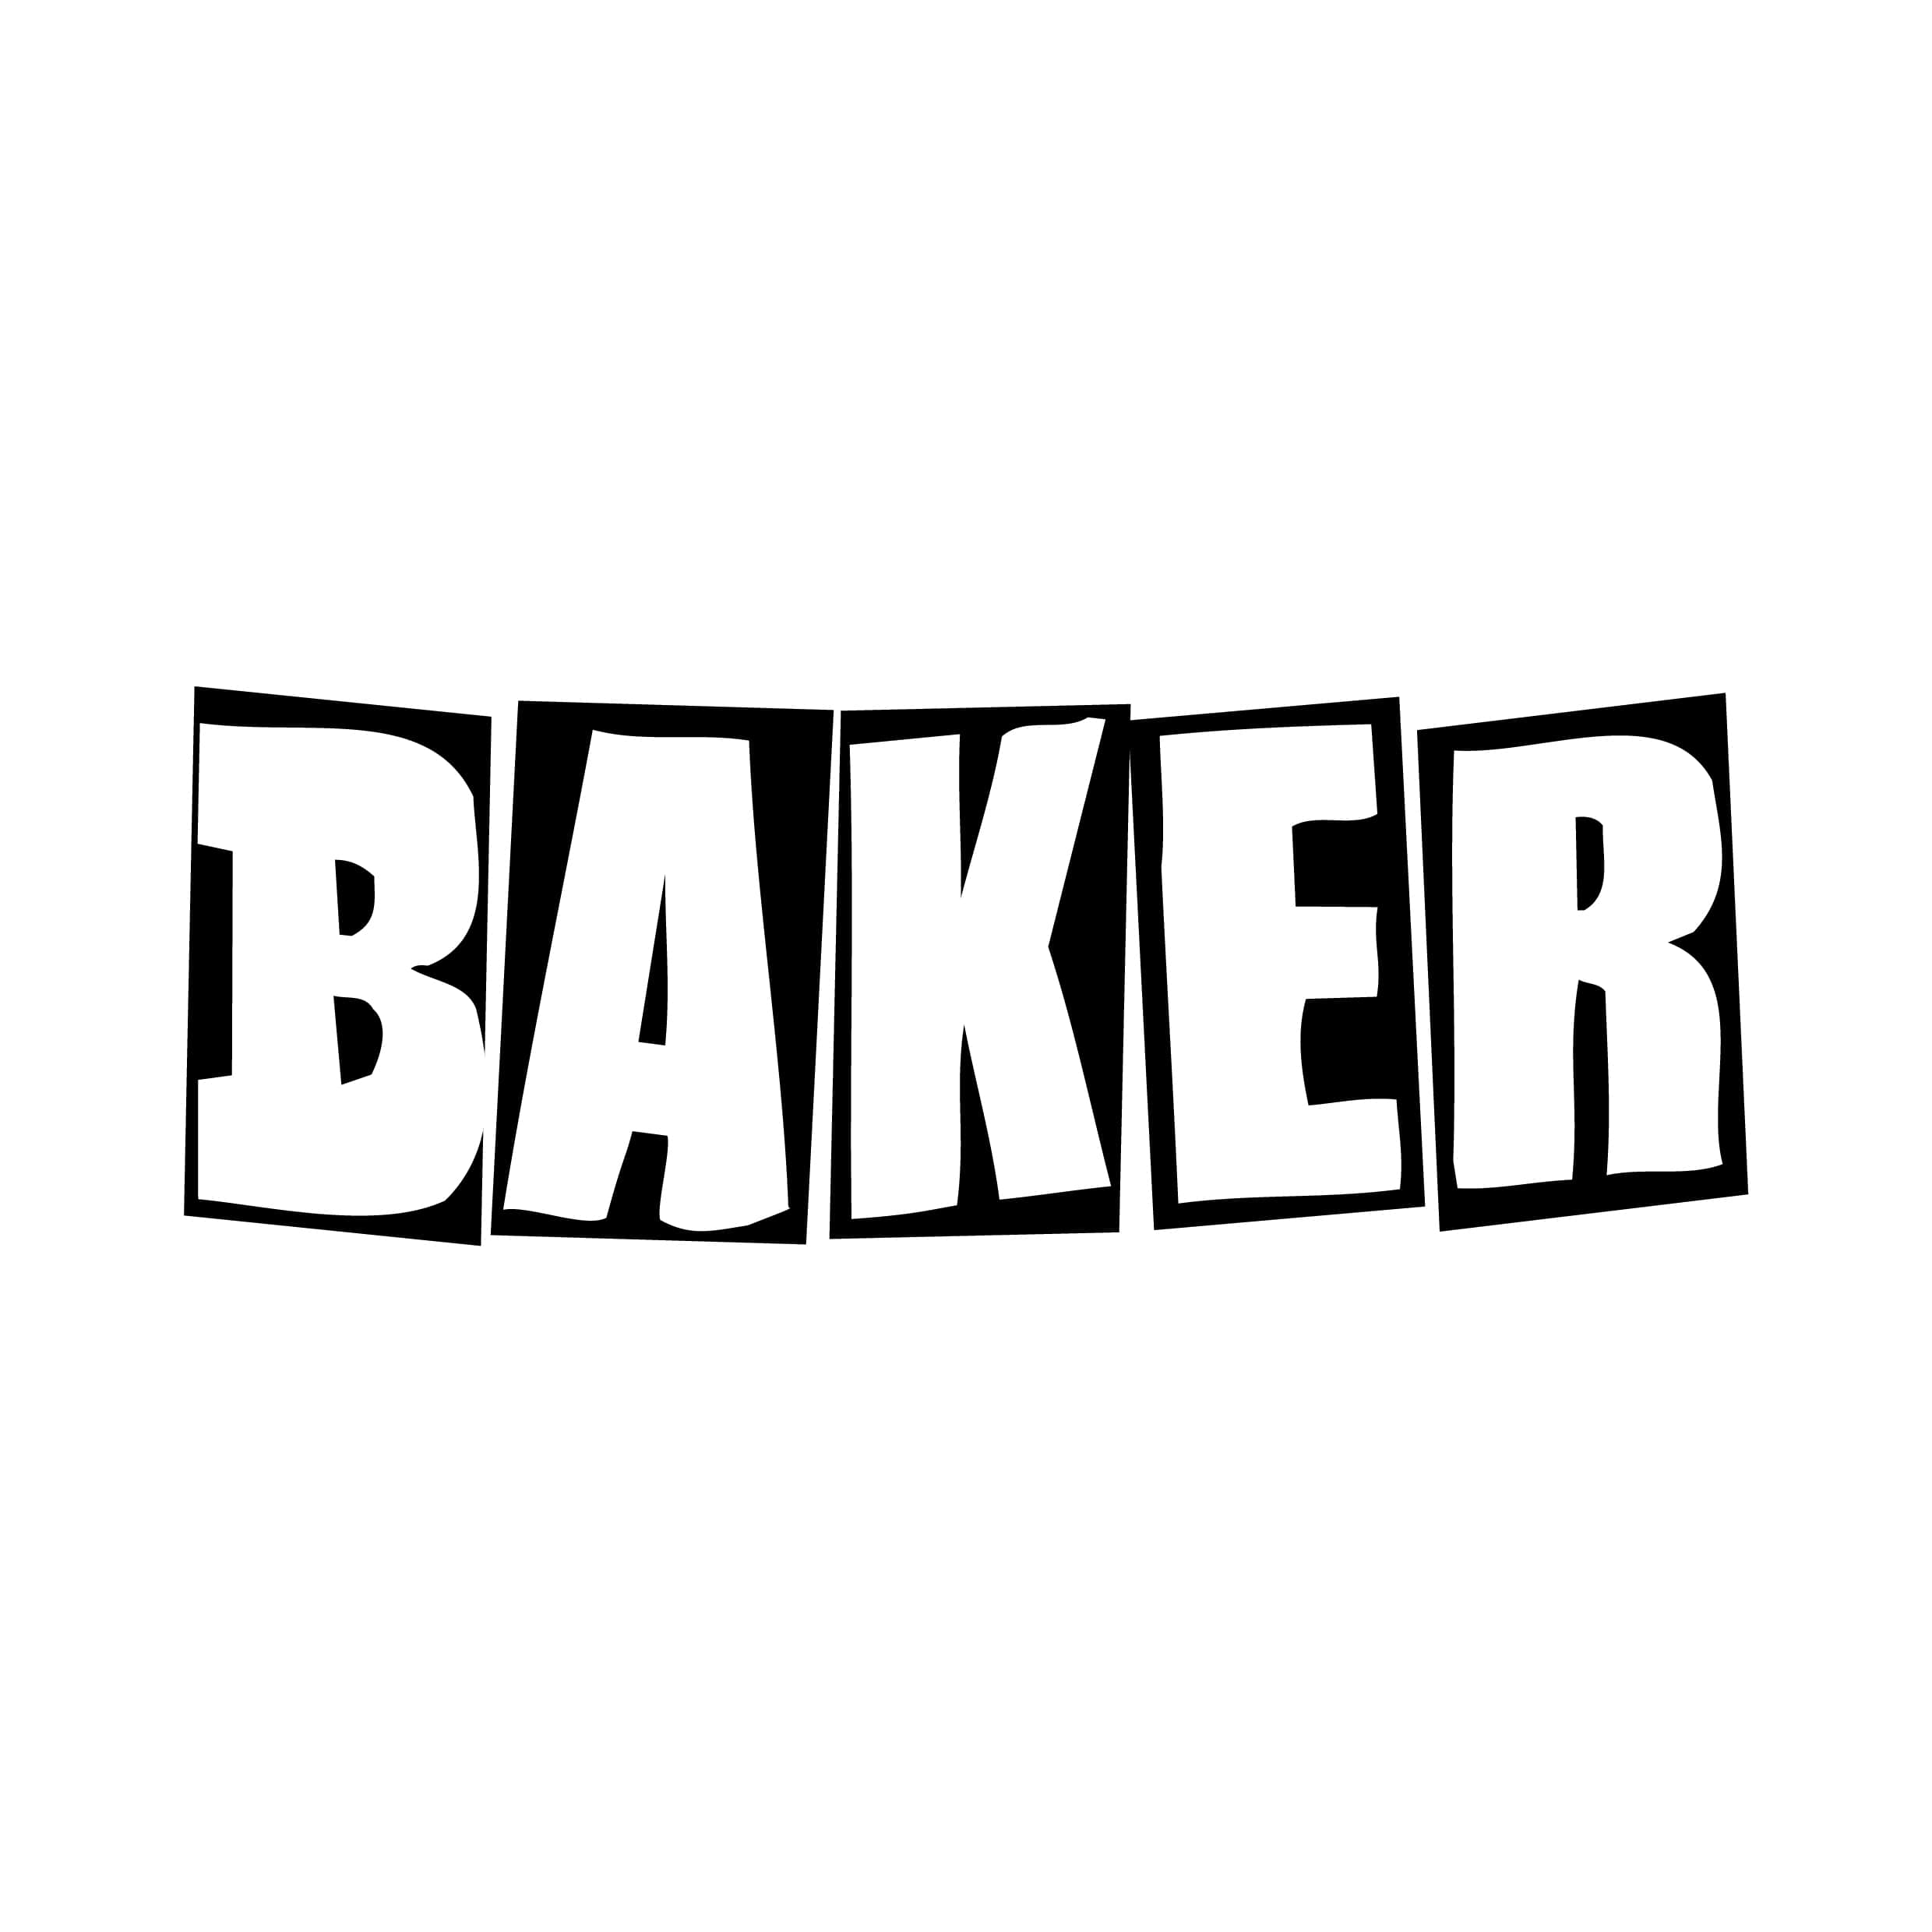 stickers-baker-ref2-skate-skateboard-sport-extreme-autocollant-sticker-auto-autocollants-decals-sponsors-logo-min